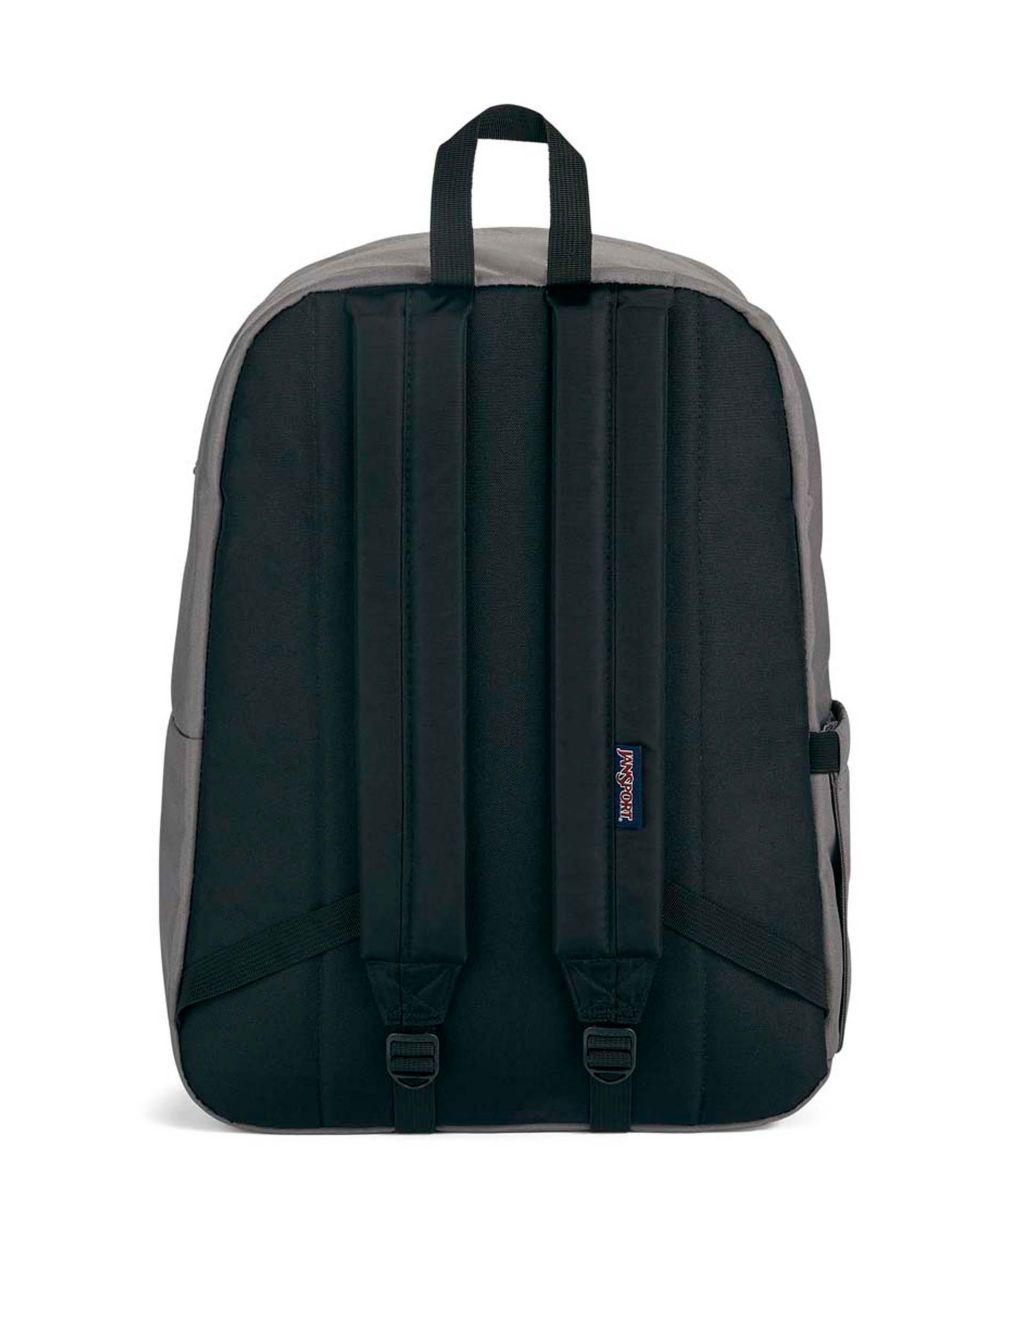 SuperBreak Plus Backpack image 6